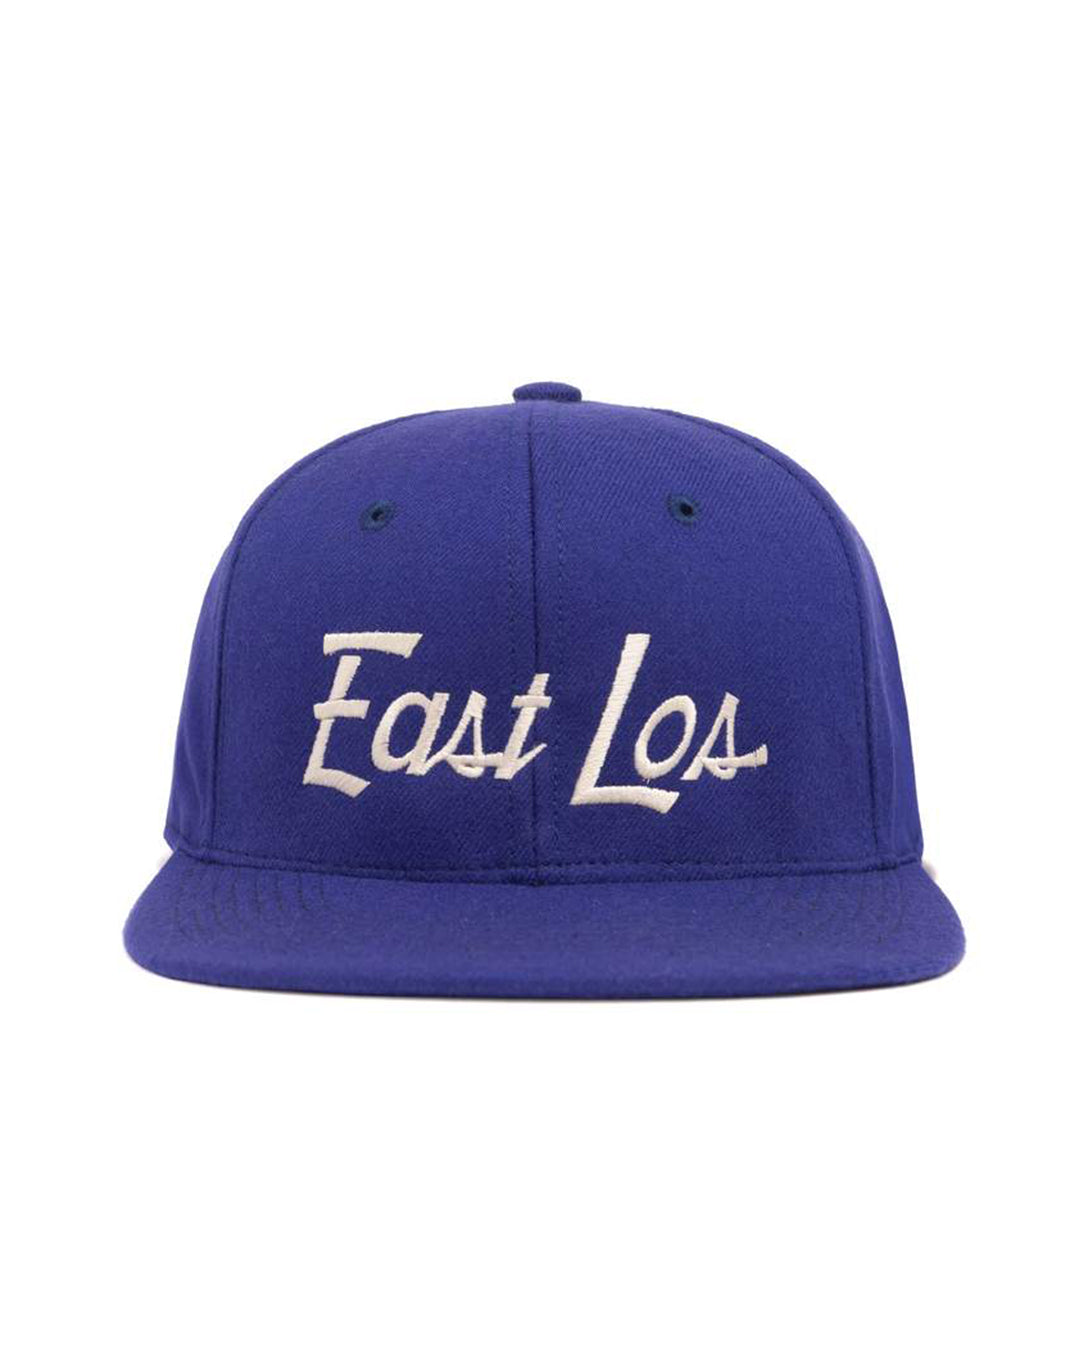 HOOD HAT / EAST LOS (ROYAL / IVORY)